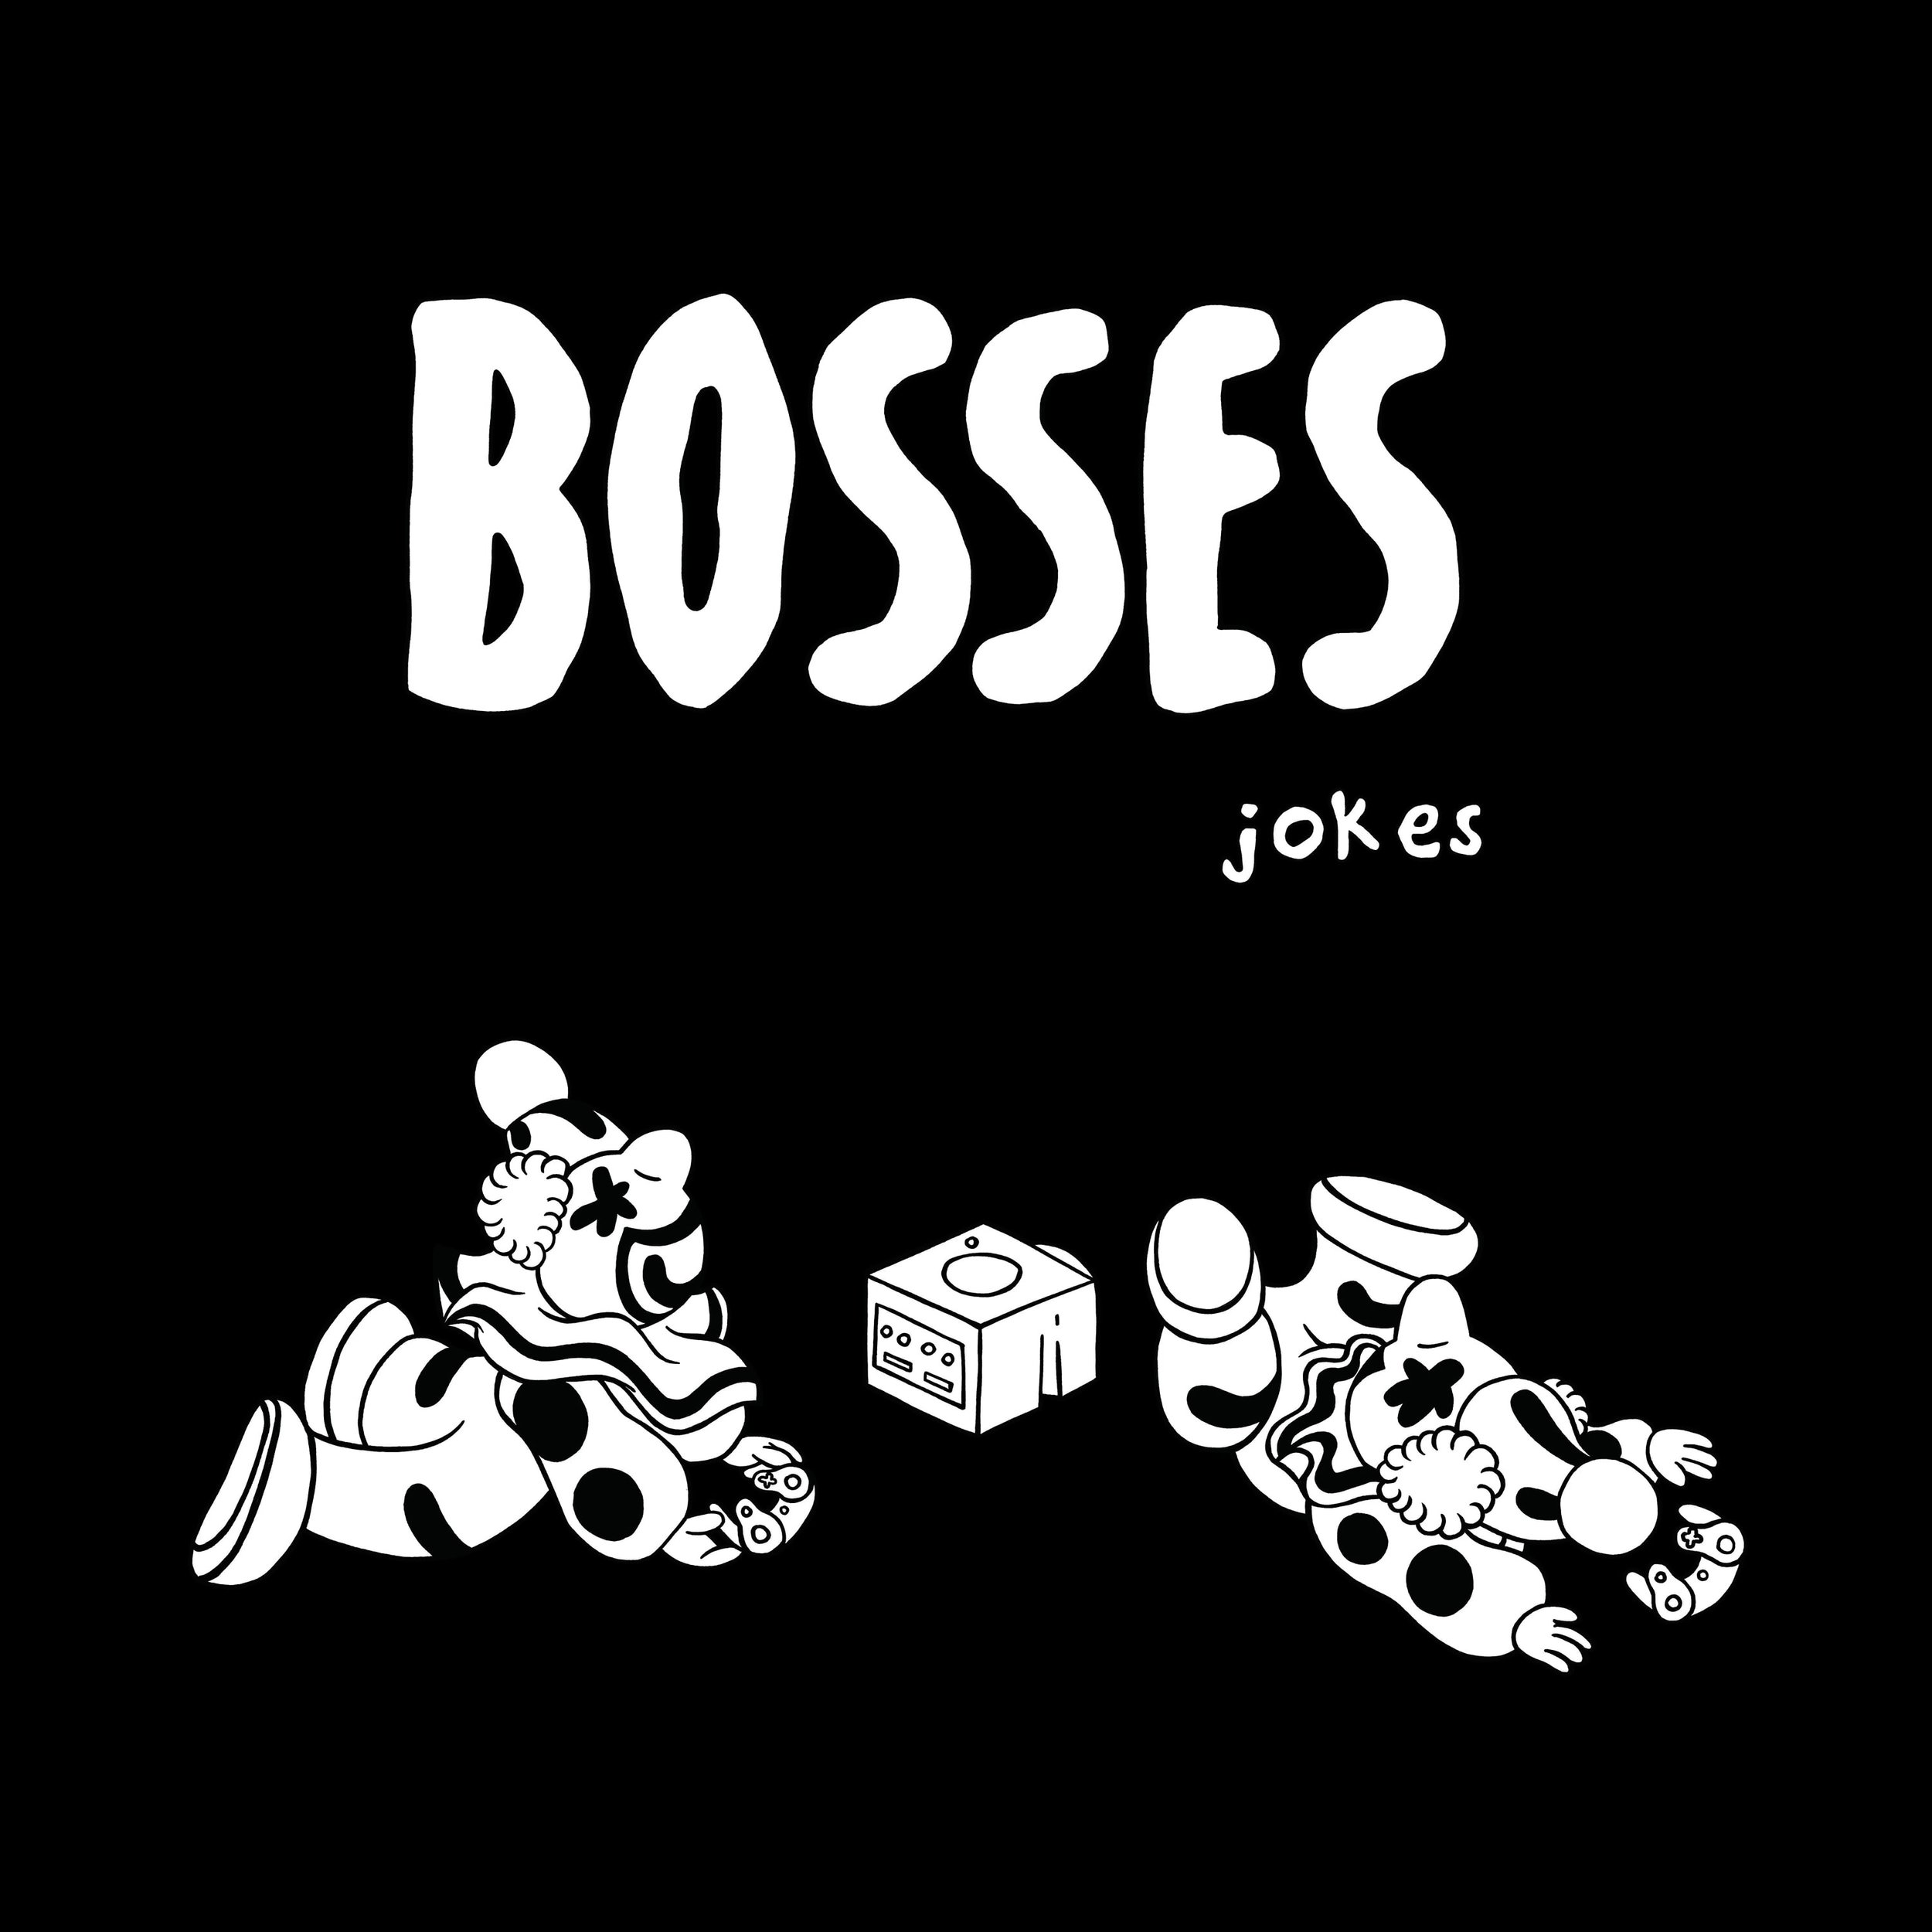 Bosses - Jokes - Cover.jpeg